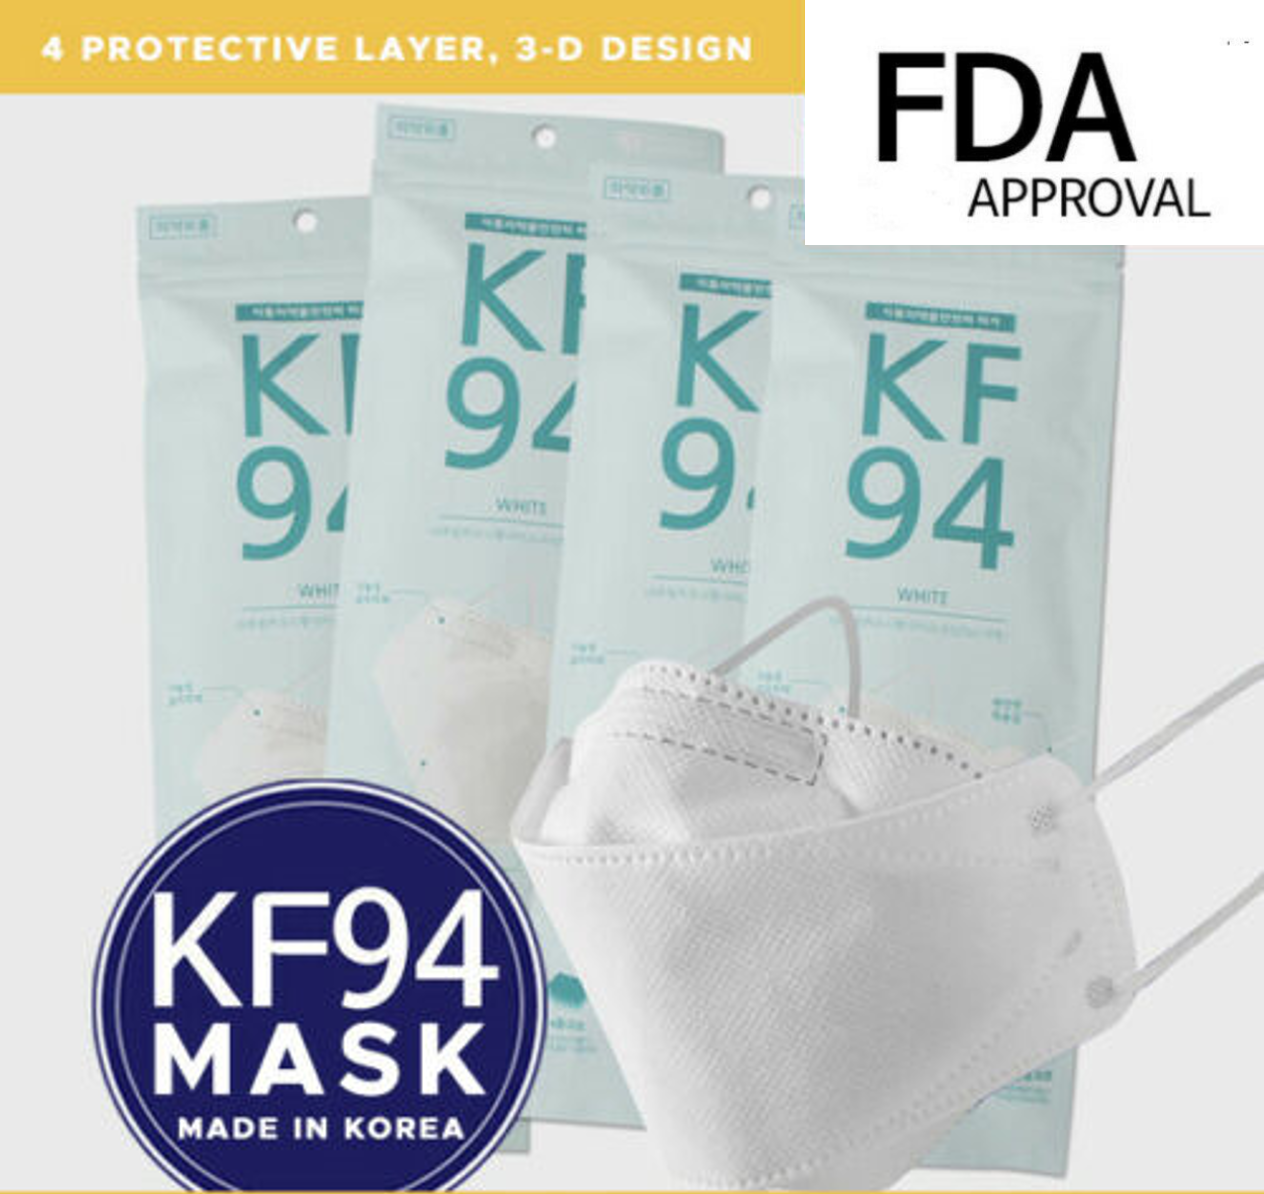 KF94 10PCS/20PCS 4 Protective Layer 3D Filter Adult Face Mask (Made in Korea)